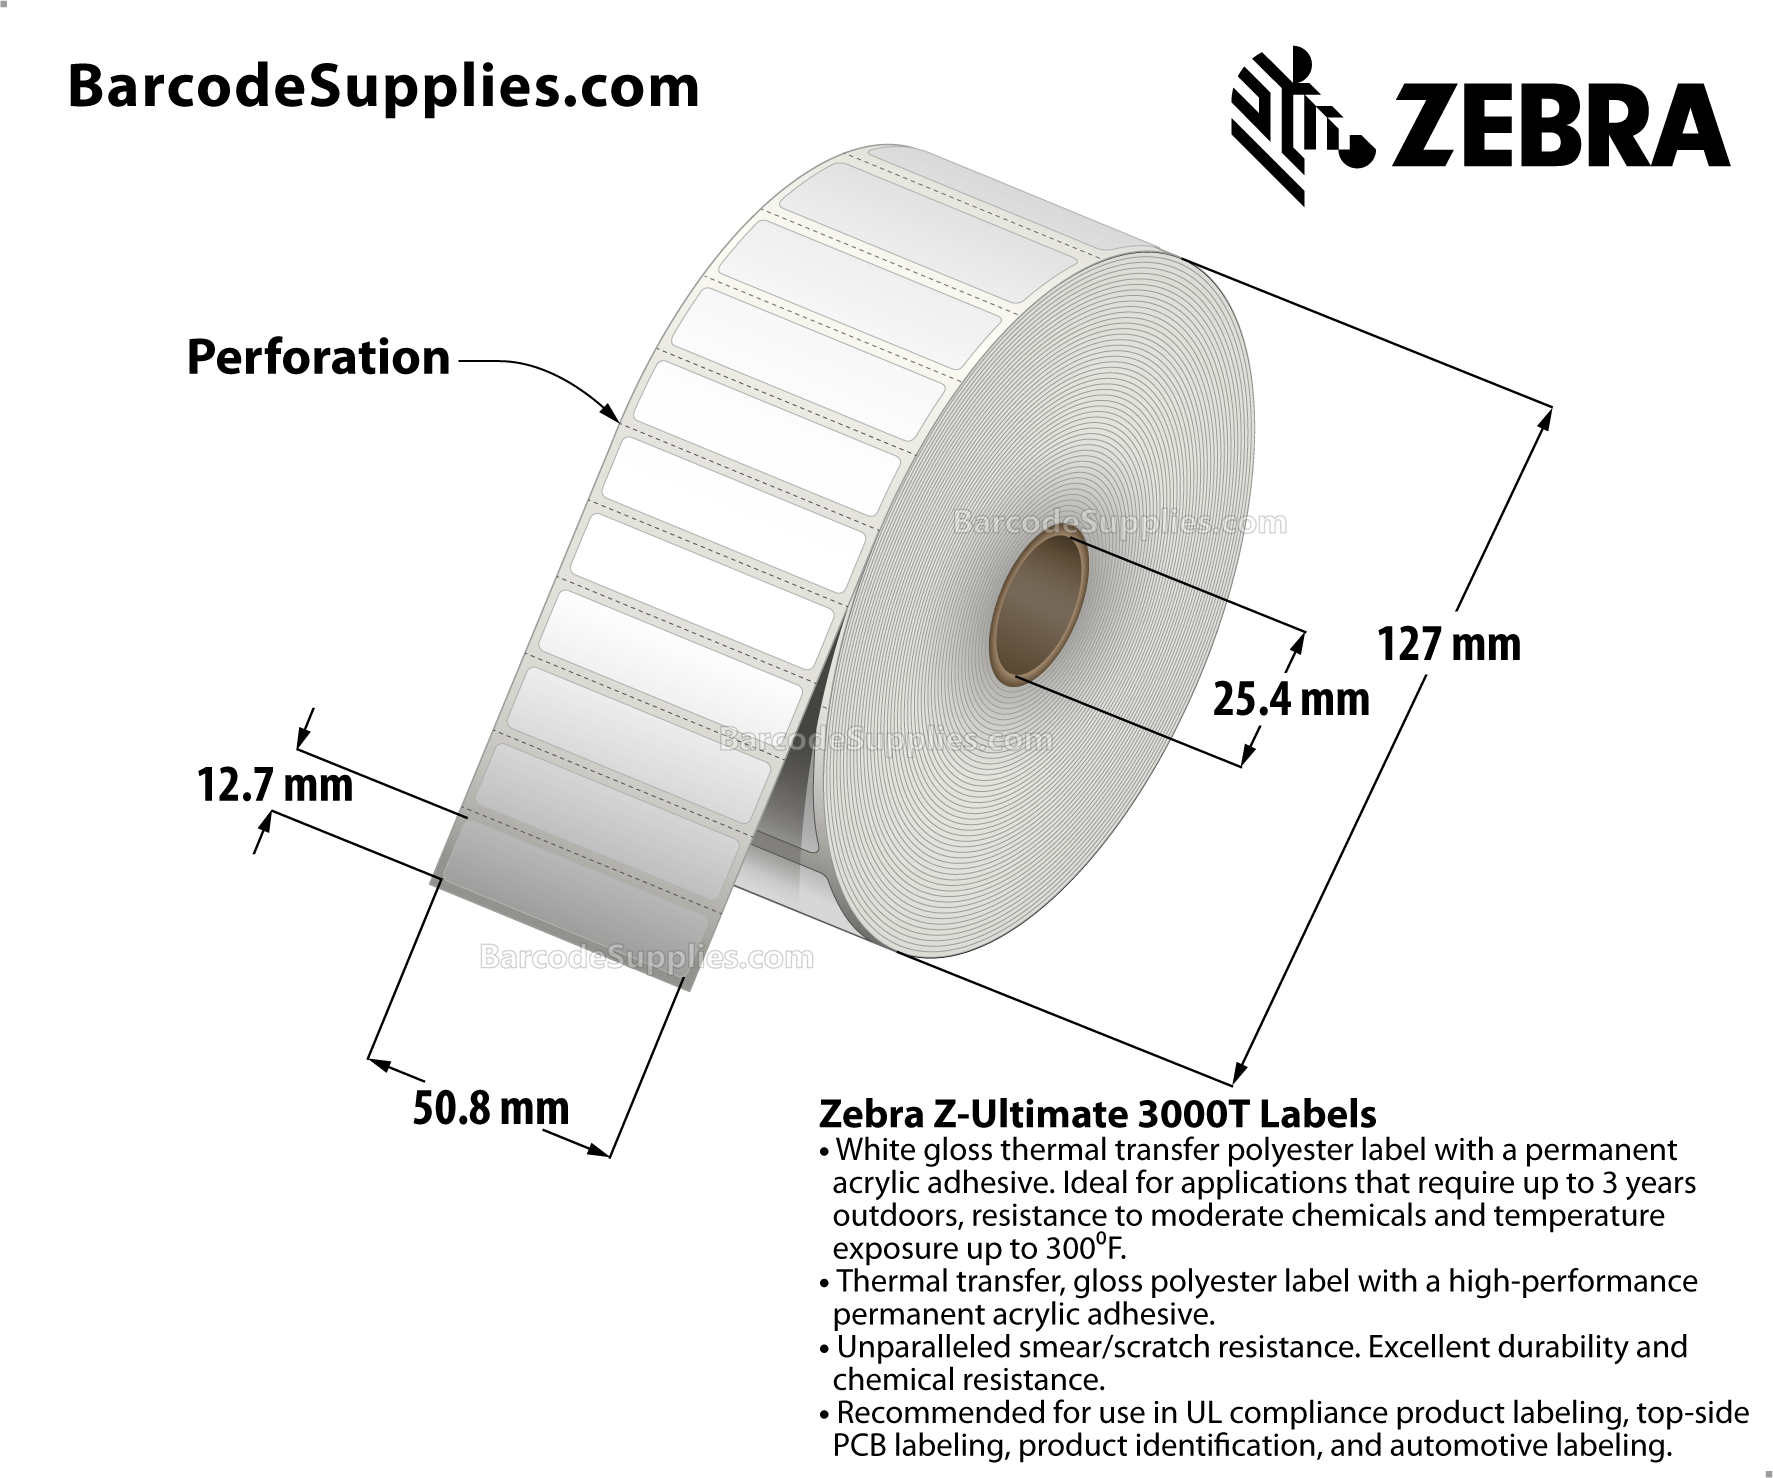 Zebra 2.00 x 0.50 Thermal Transfer Labels - Z-Ultimate 3000T - 1" Core Rolls - 4,550 Labels